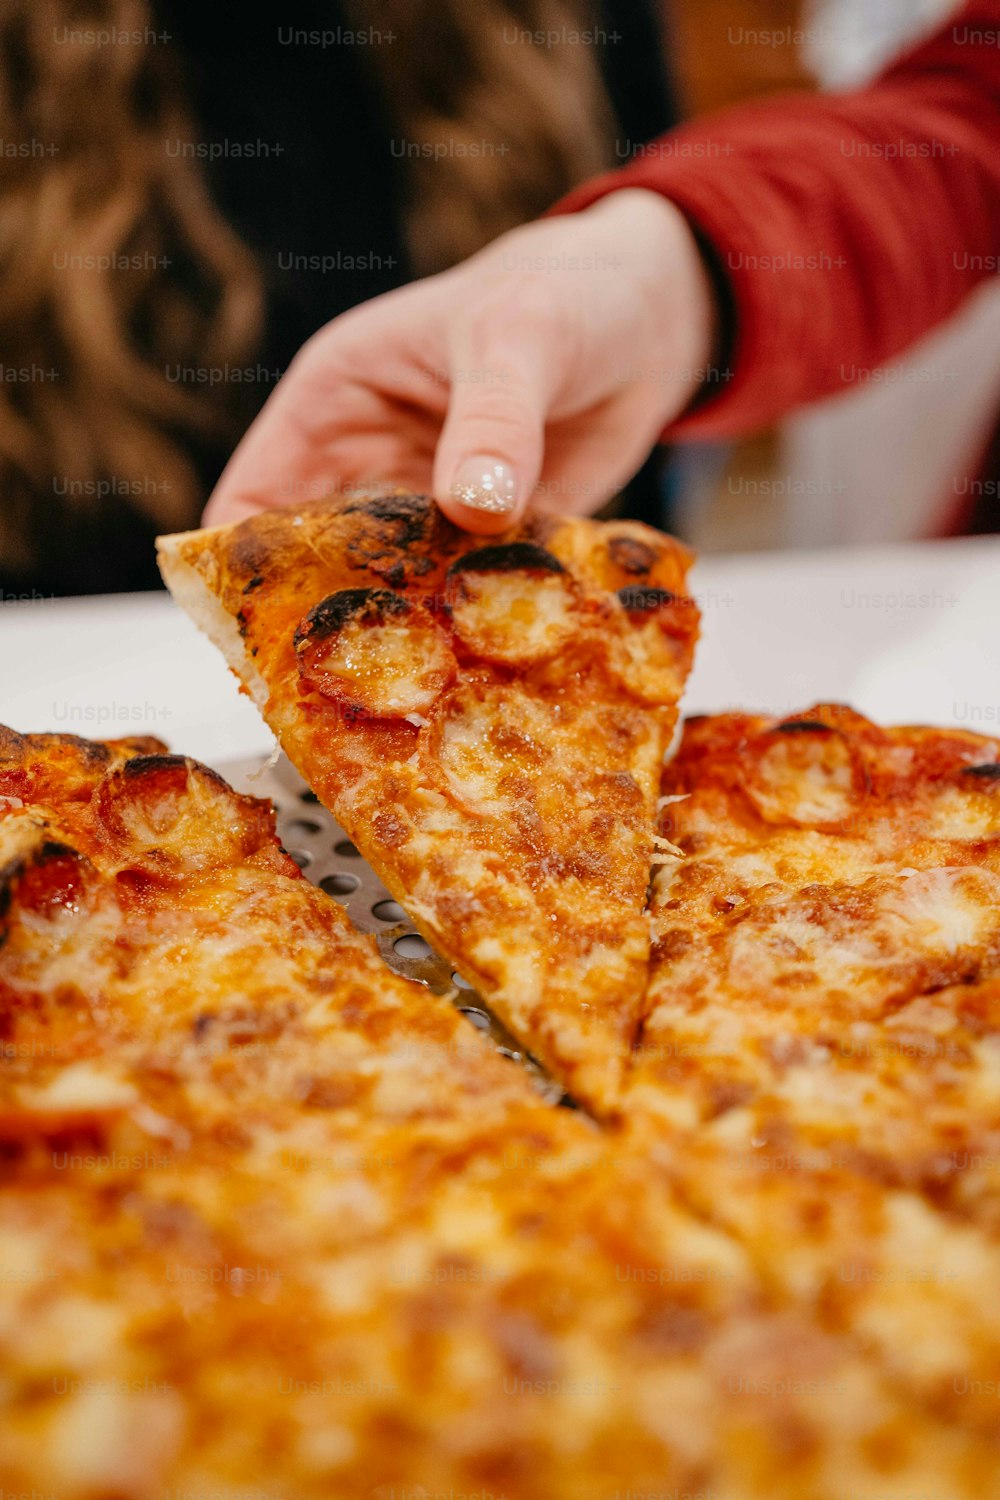 una persona cortando una rebanada de pizza con un cuchillo